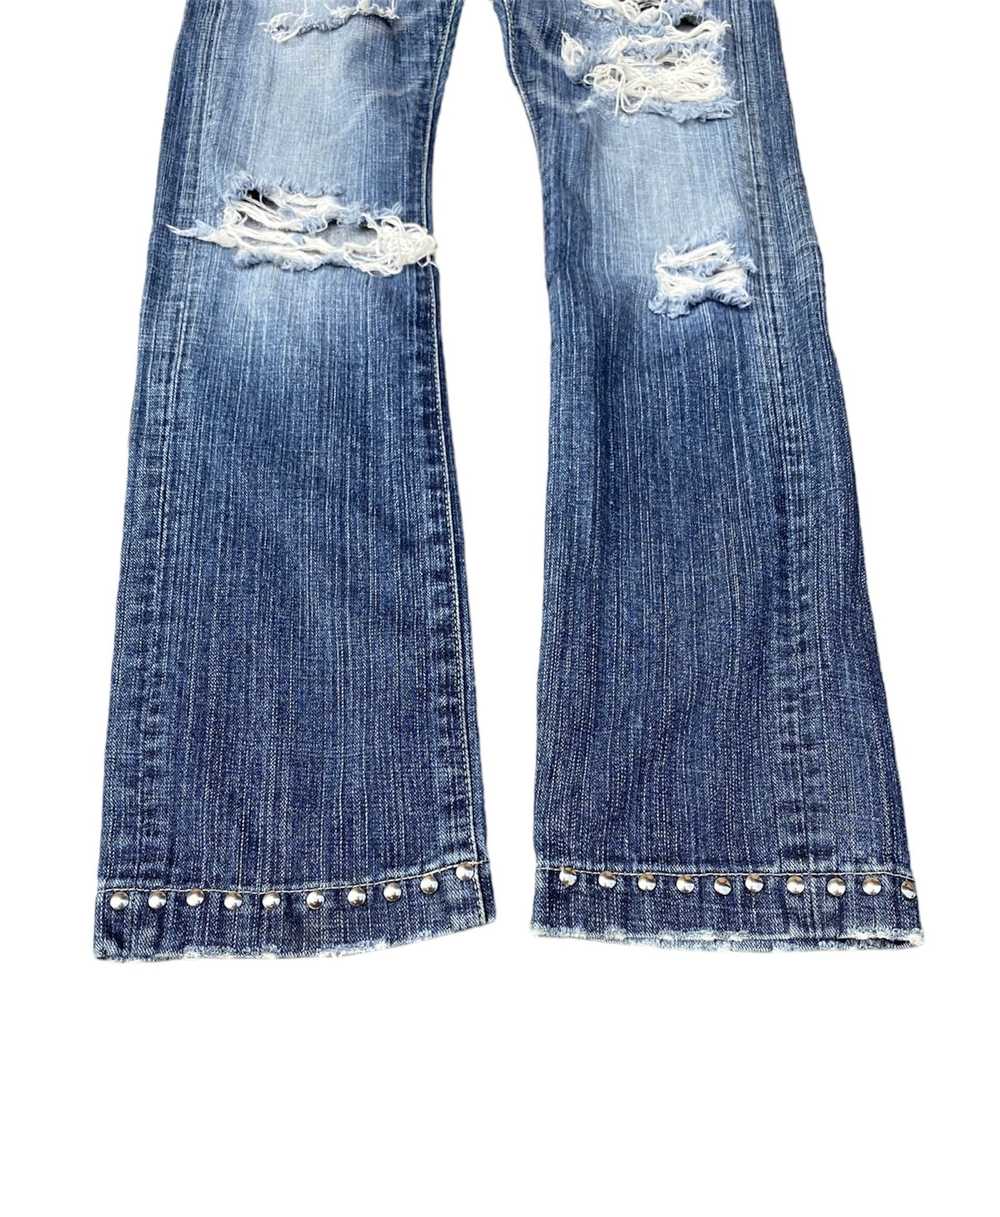 Vanquish Vanquish Gold Distressed Studded Jeans - image 6